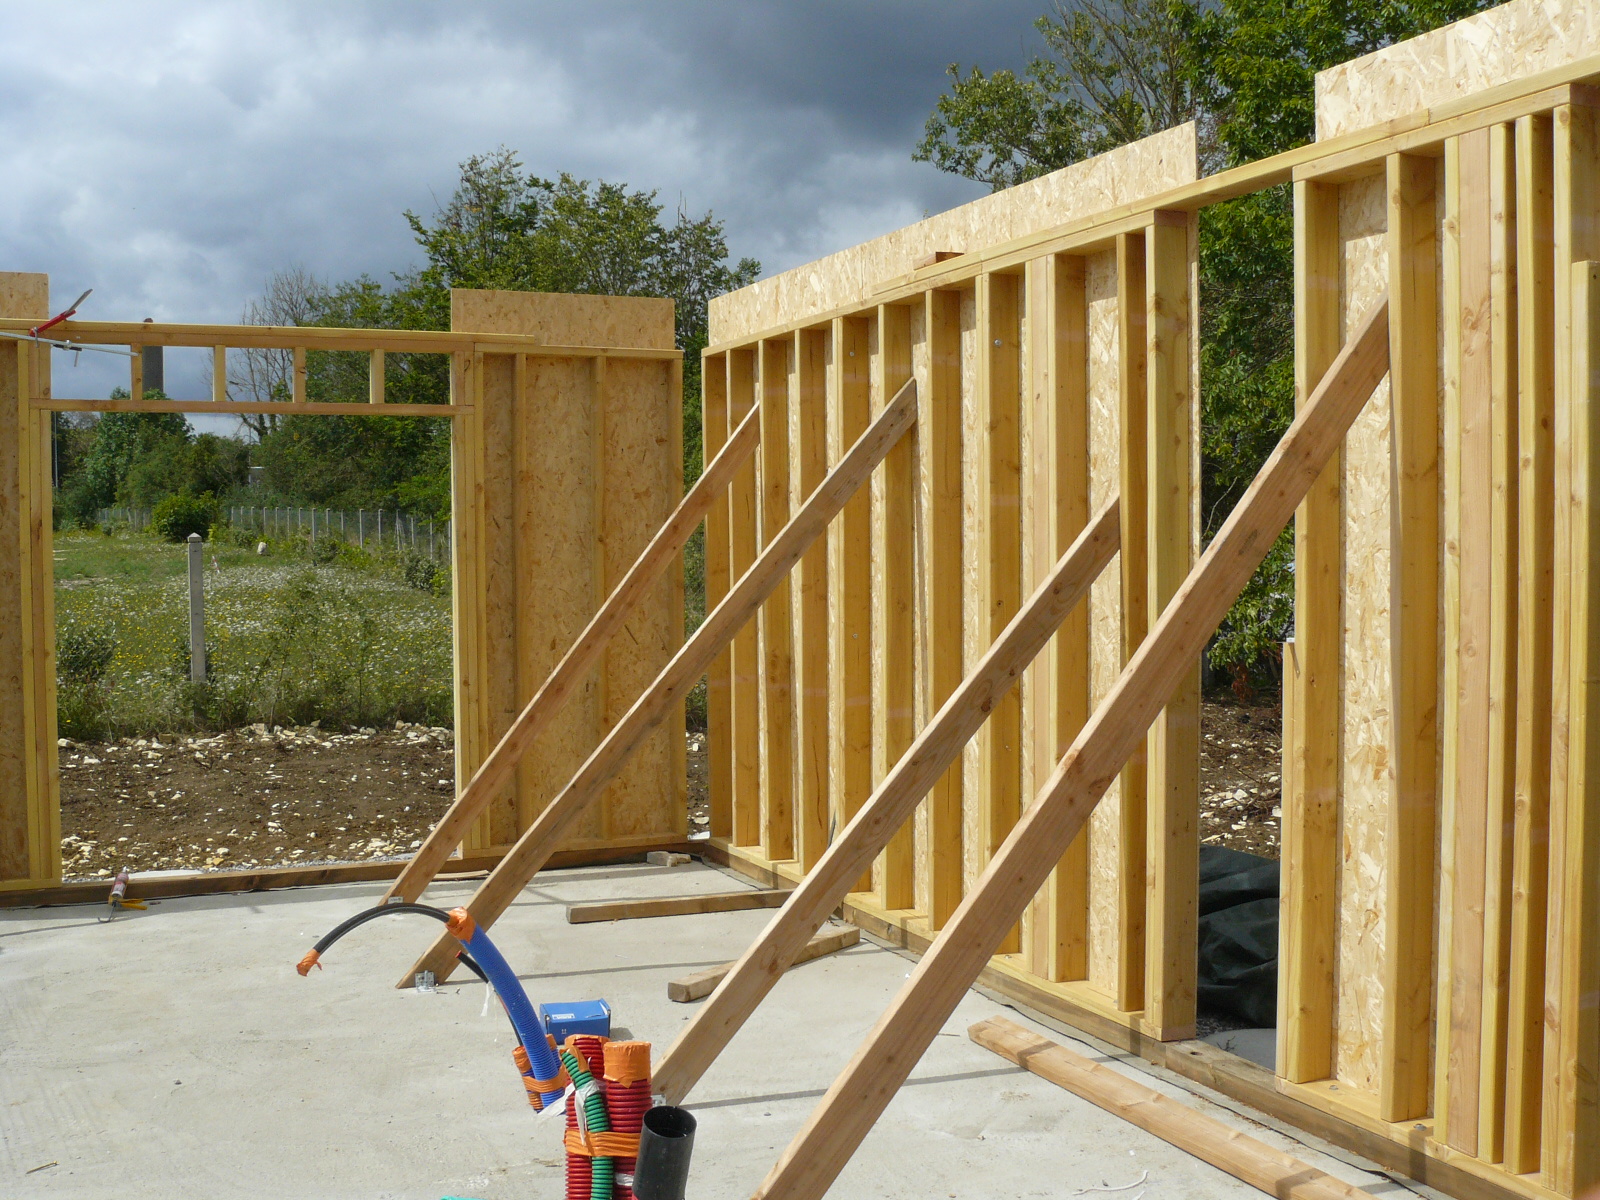 Casa din lemn la cheie - Fazele constructive ale unei casa din lemn la cheie